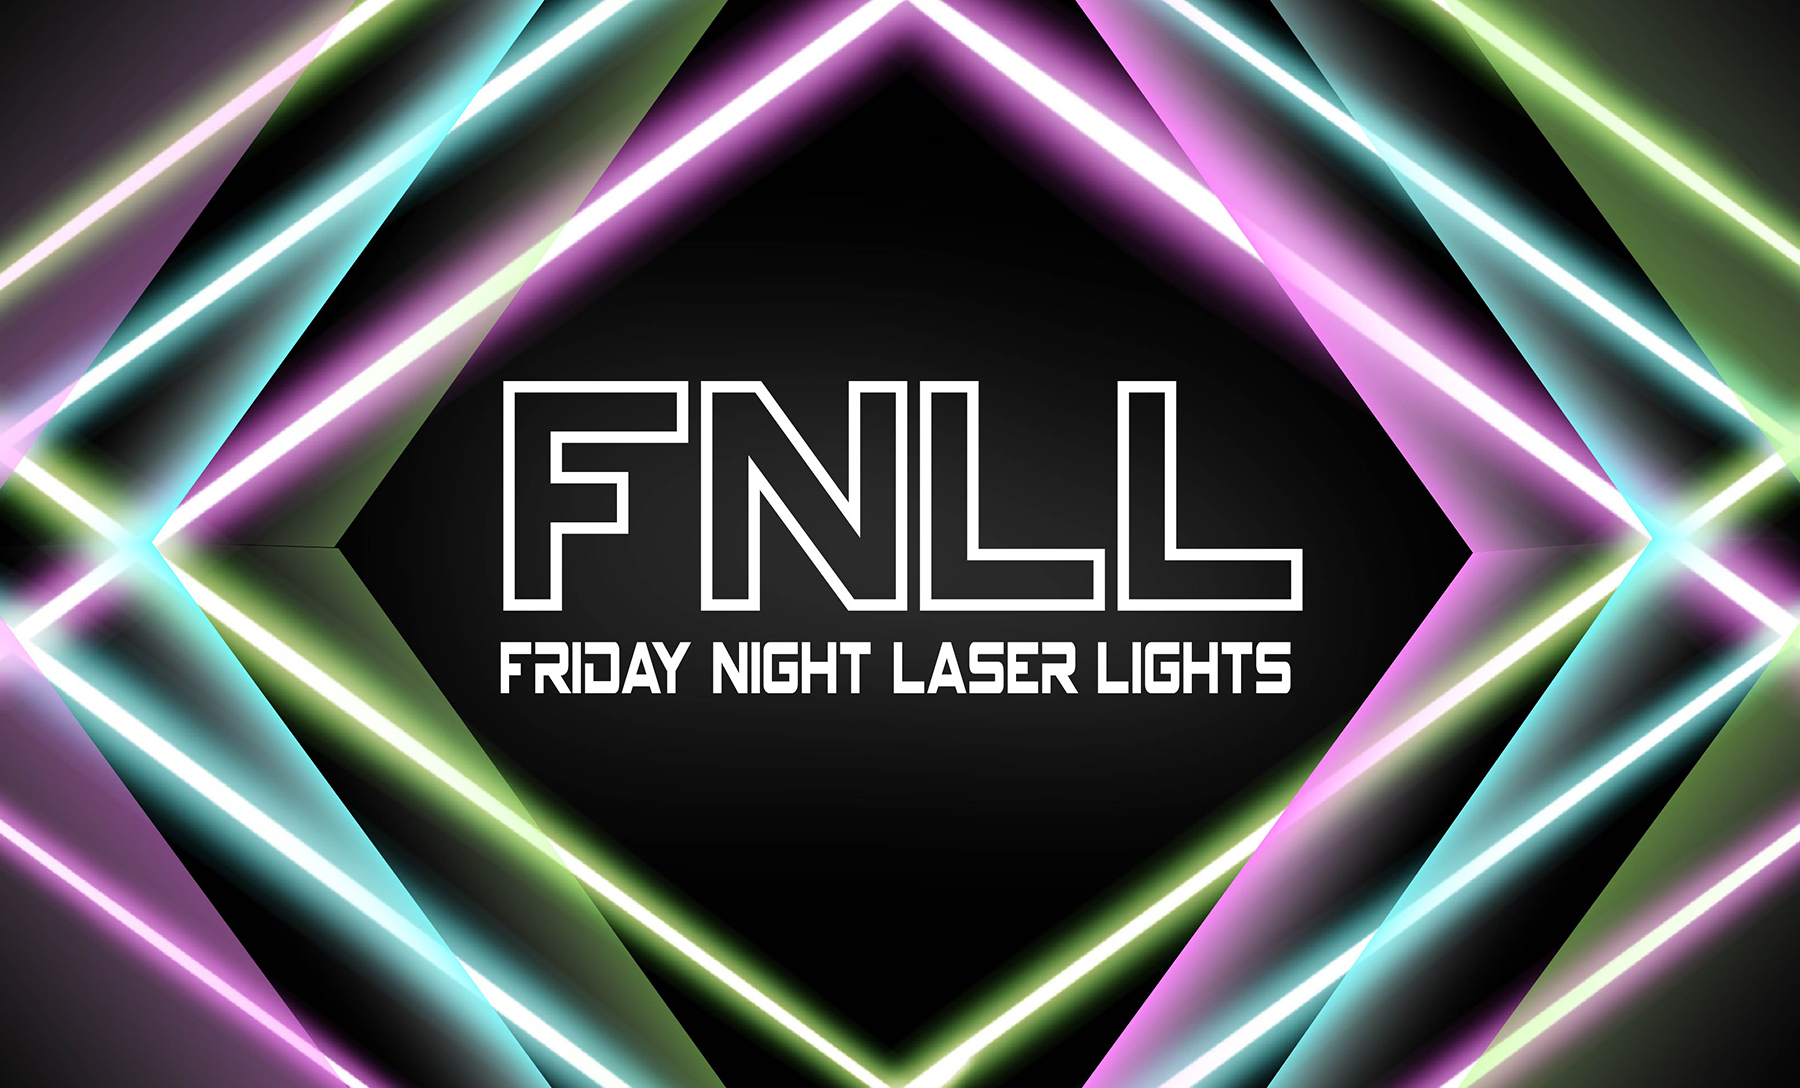 Neon Diamond Laser Background. Text Reads: " FNLL Friday Night Laser Lights"